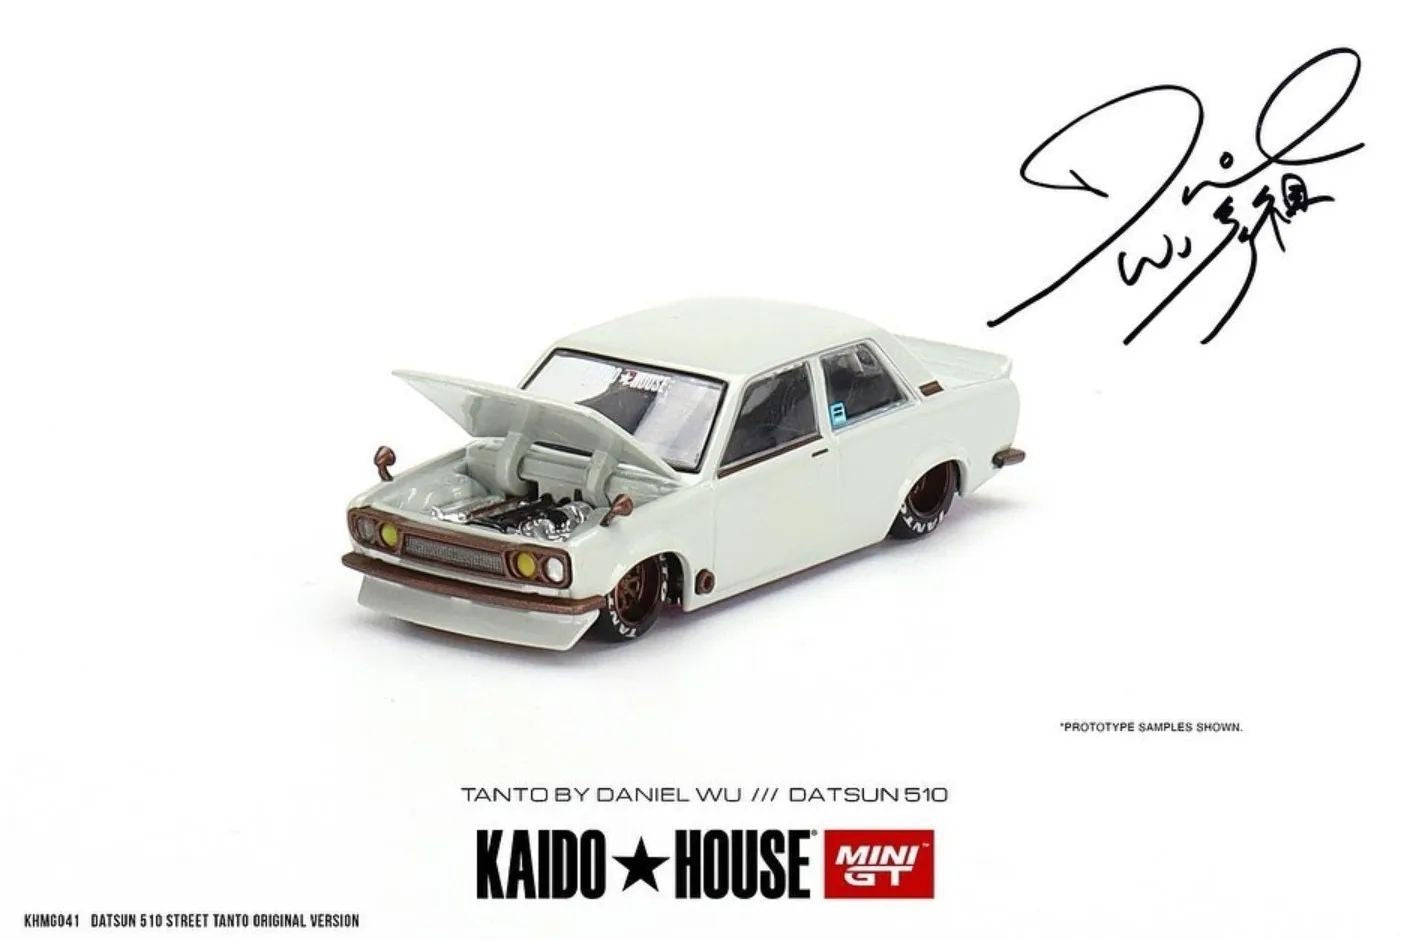 Mini GT x Kaido House x Daniel Wu Datsun 510 Street V1